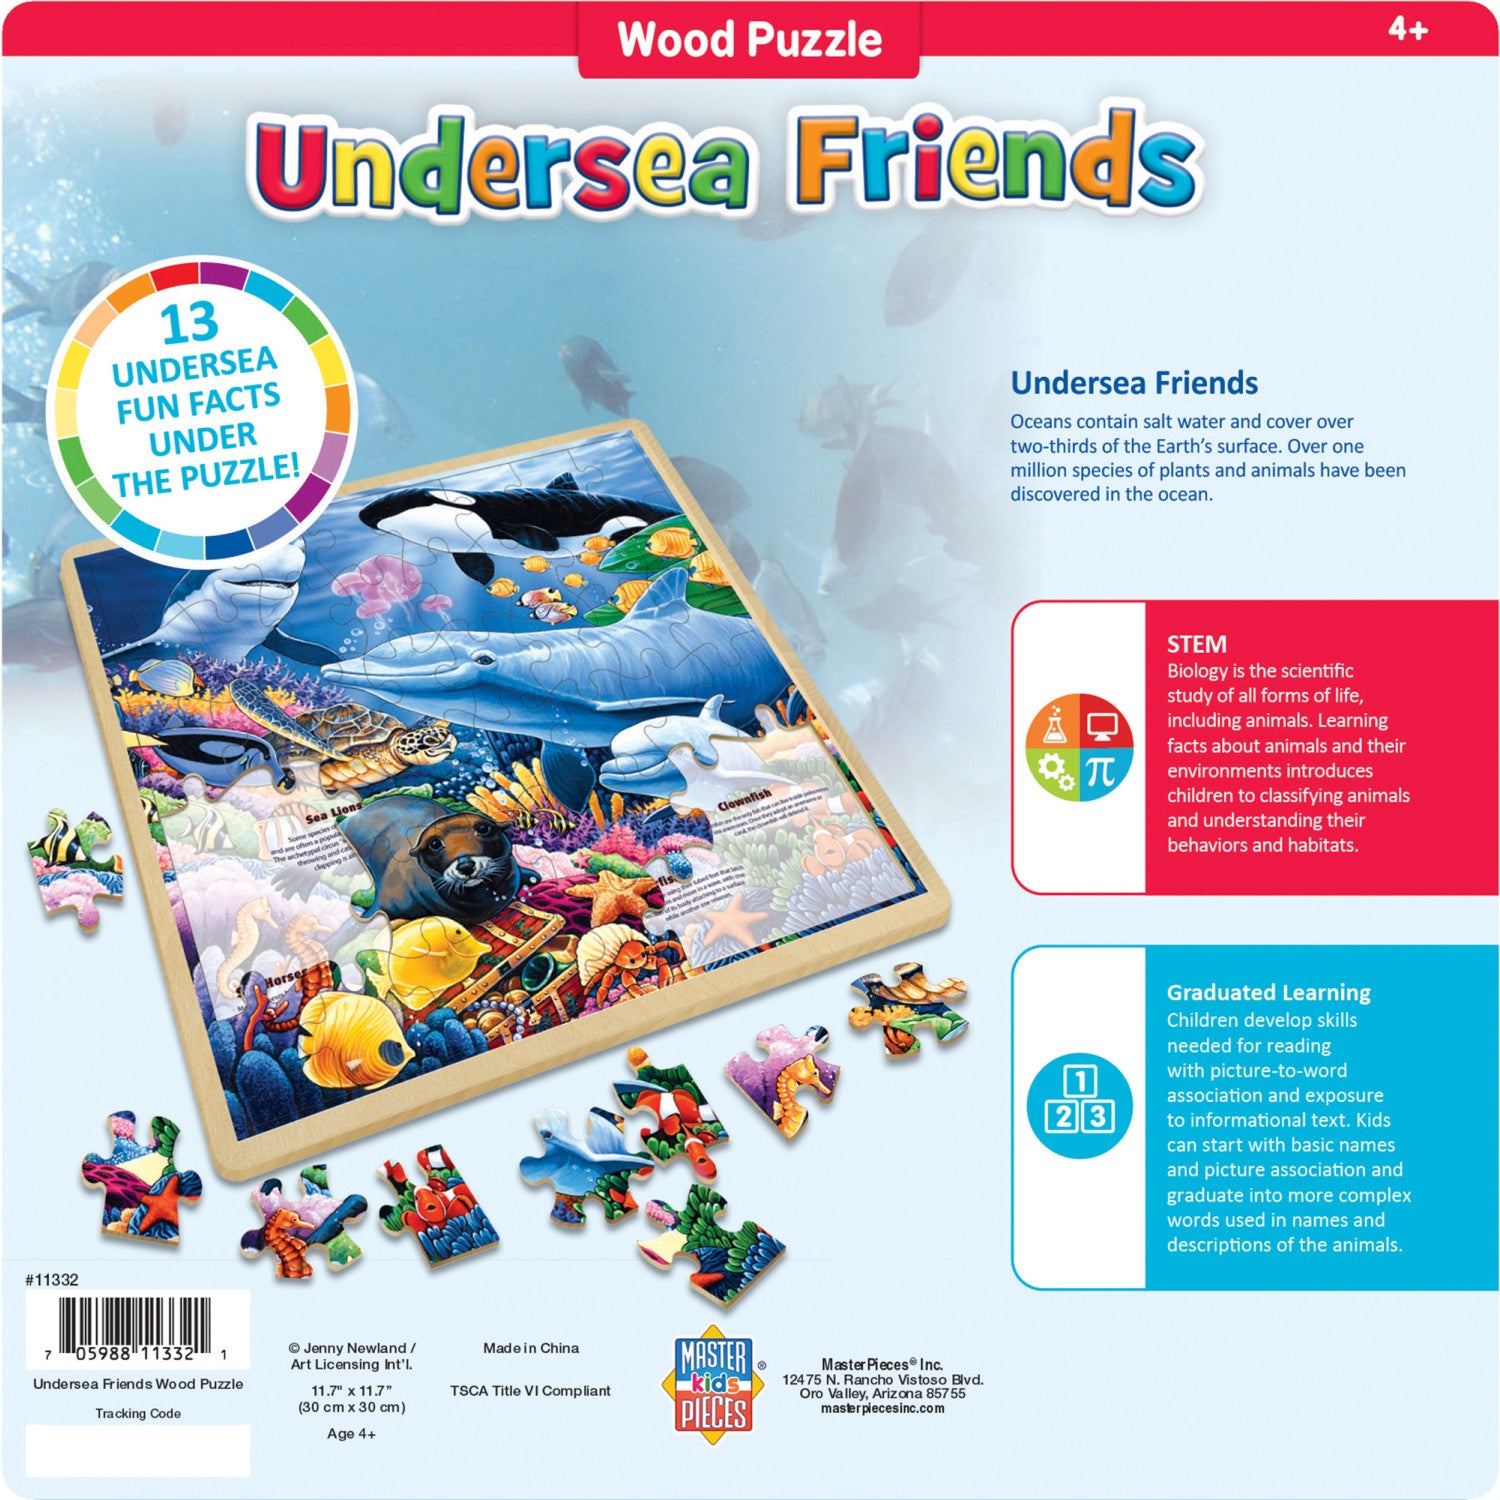 Wood Fun Facts - Undersea Friends 48 Piece Wood Puzzle